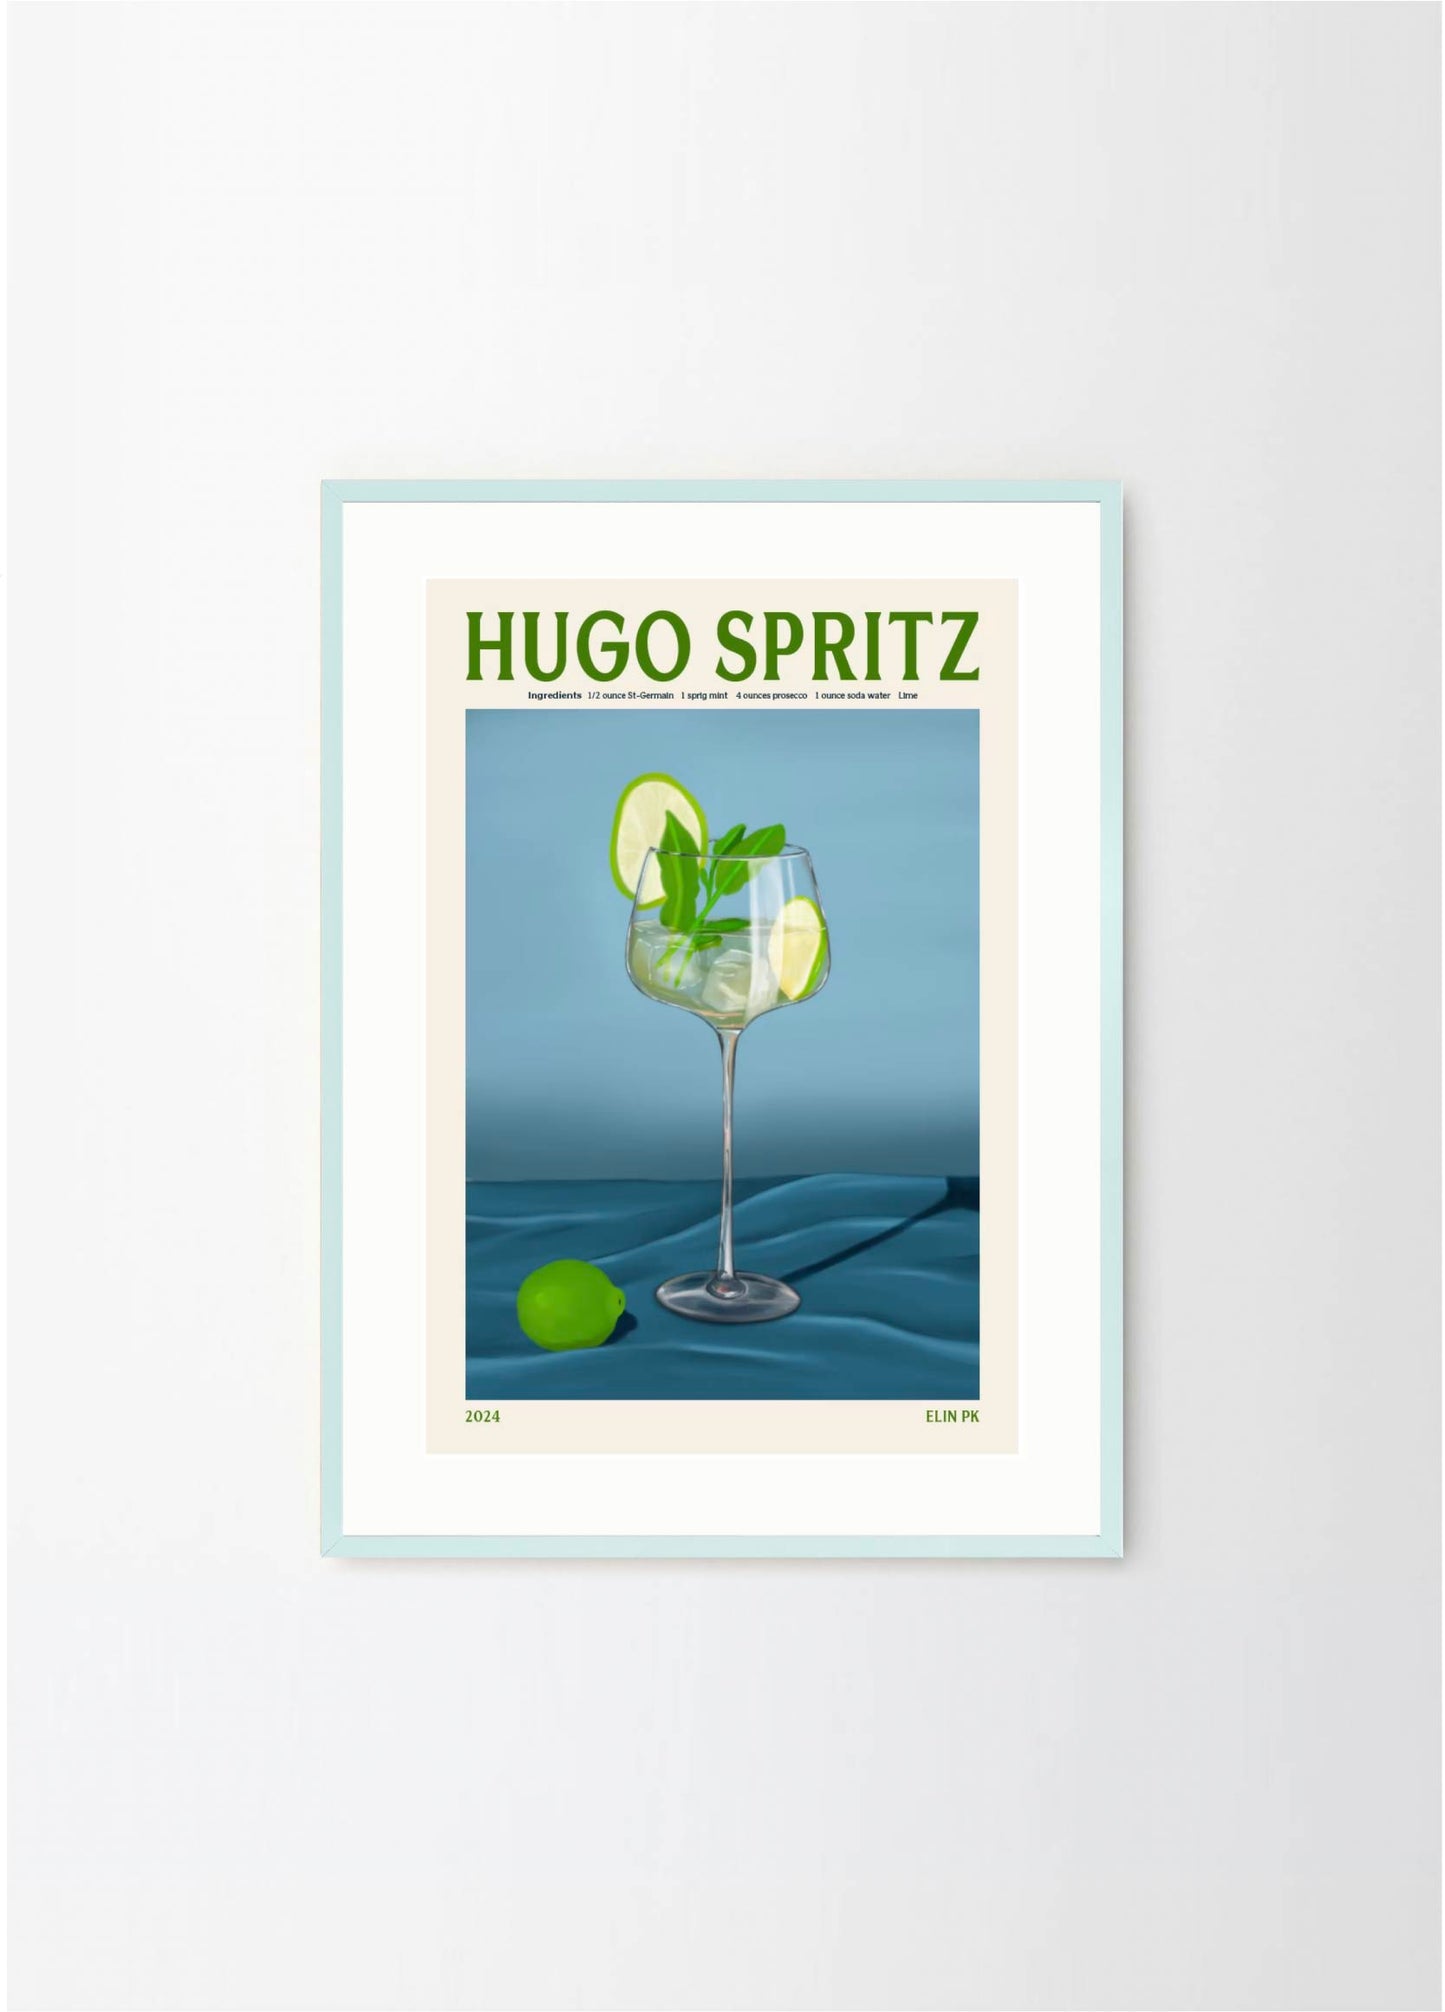 Hugo Spritz